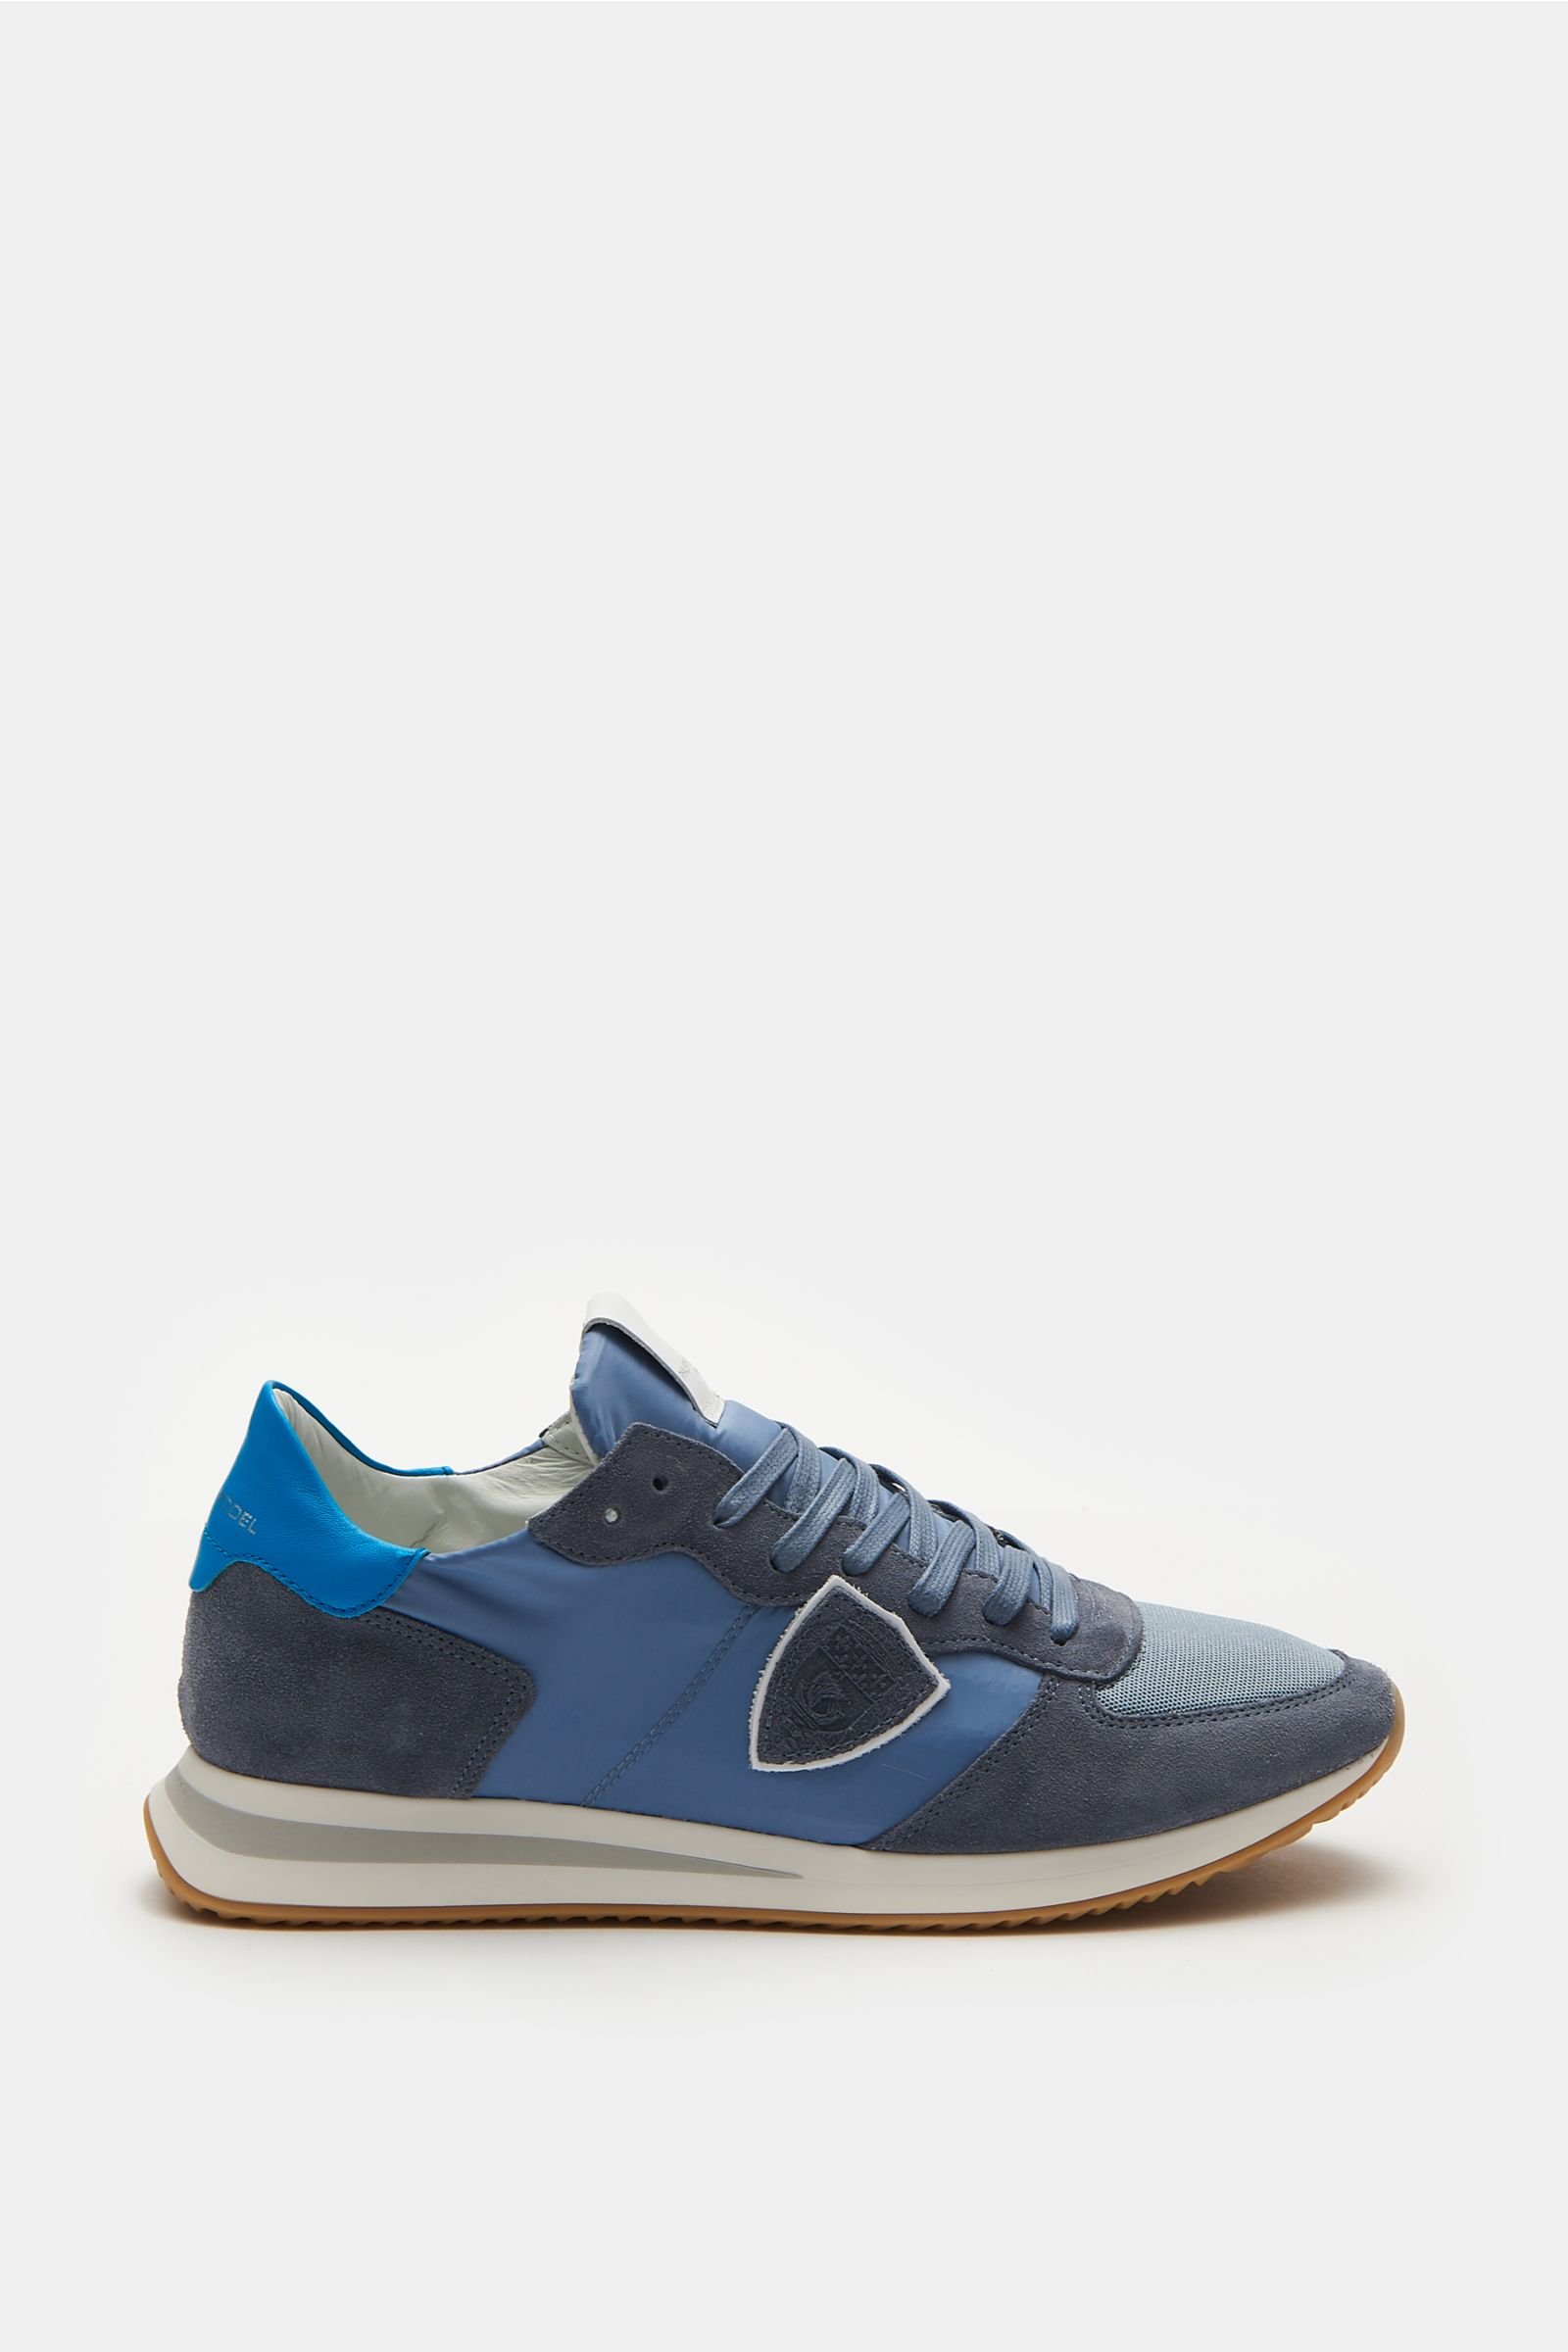 PHILIPPE MODEL sneakers 'Trpx Mondial' grey-blue | BRAUN Hamburg